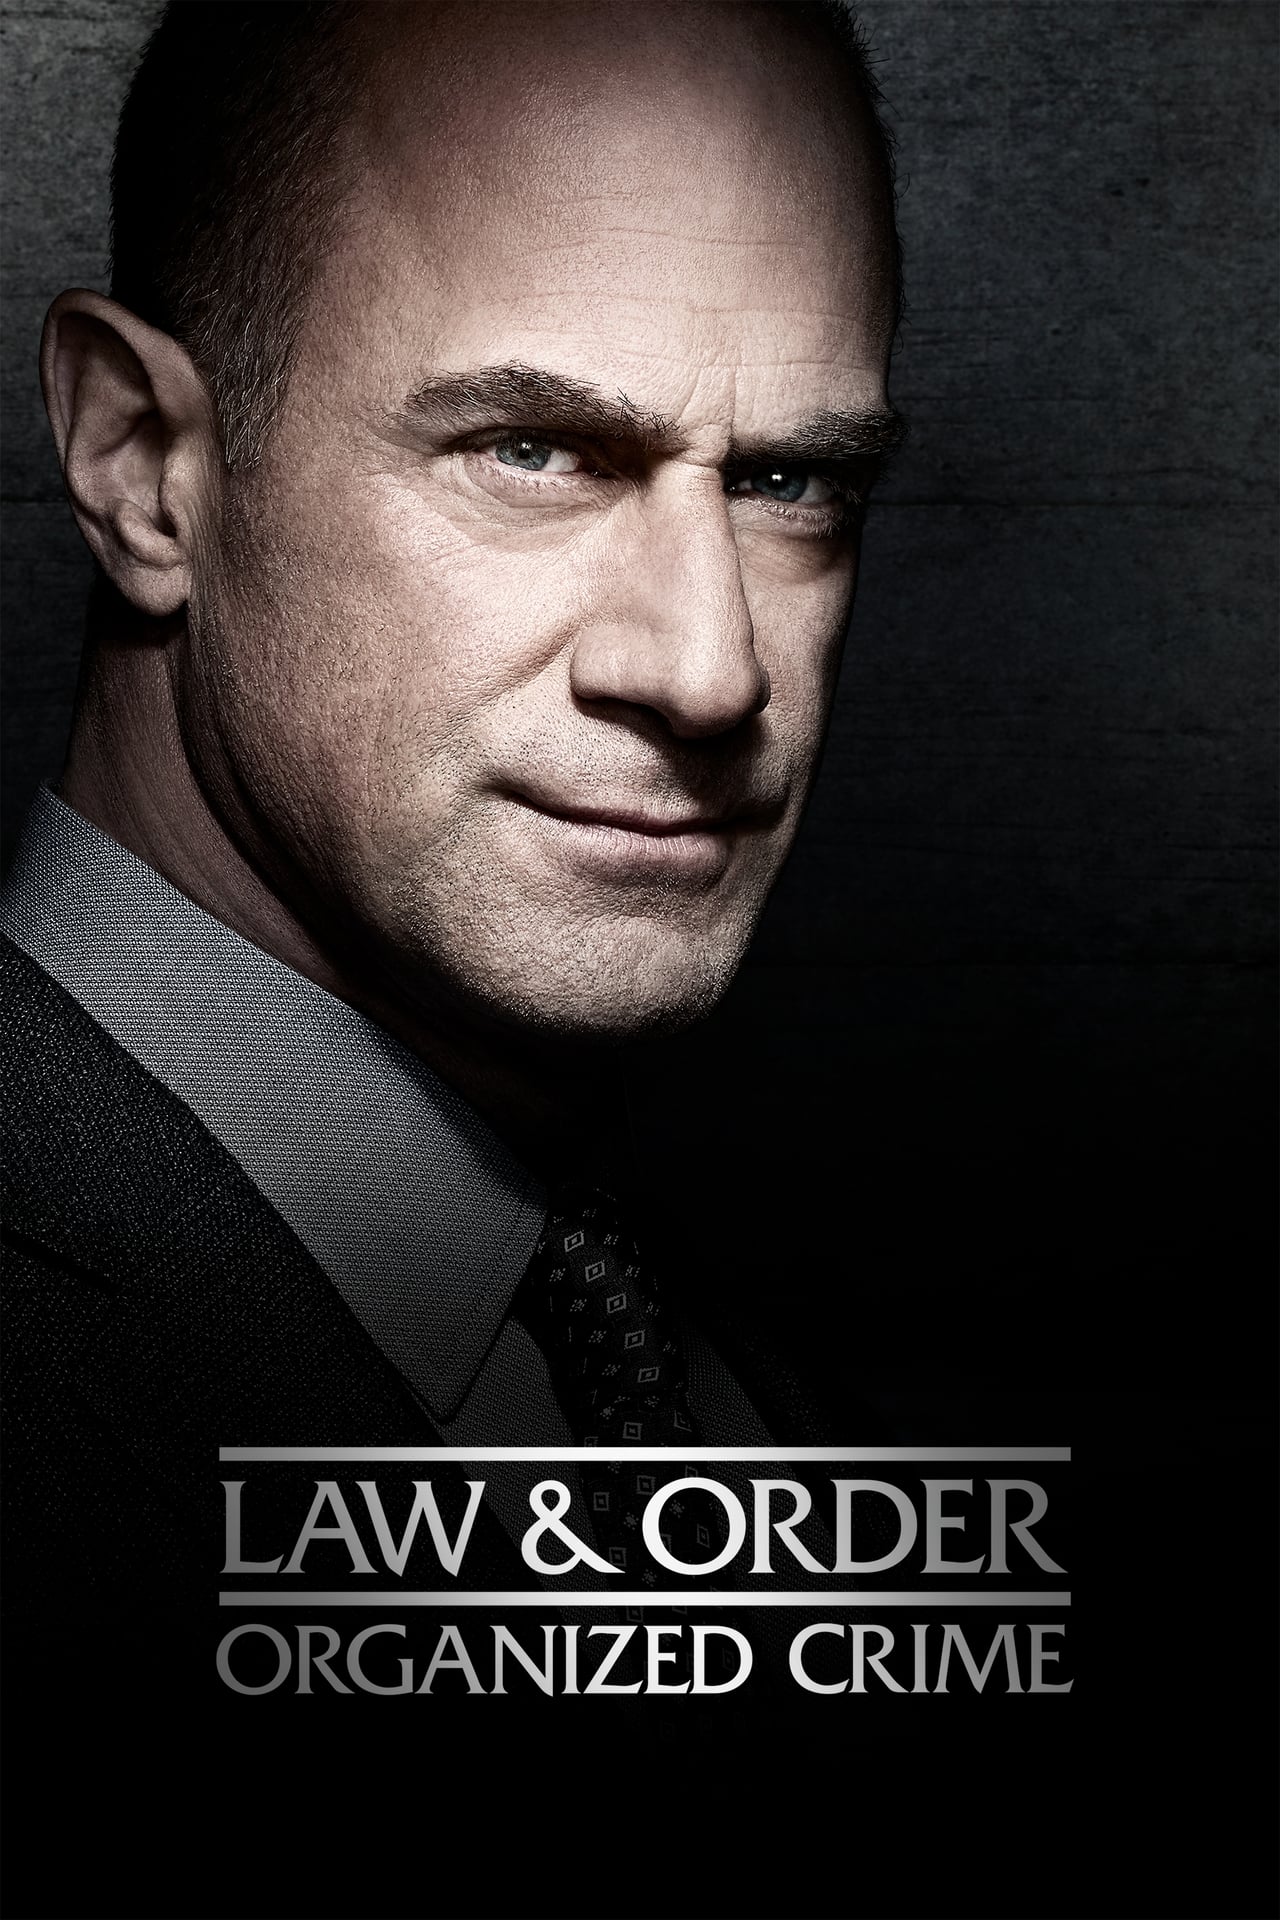 Law & Order: Organized Crime (season 2)